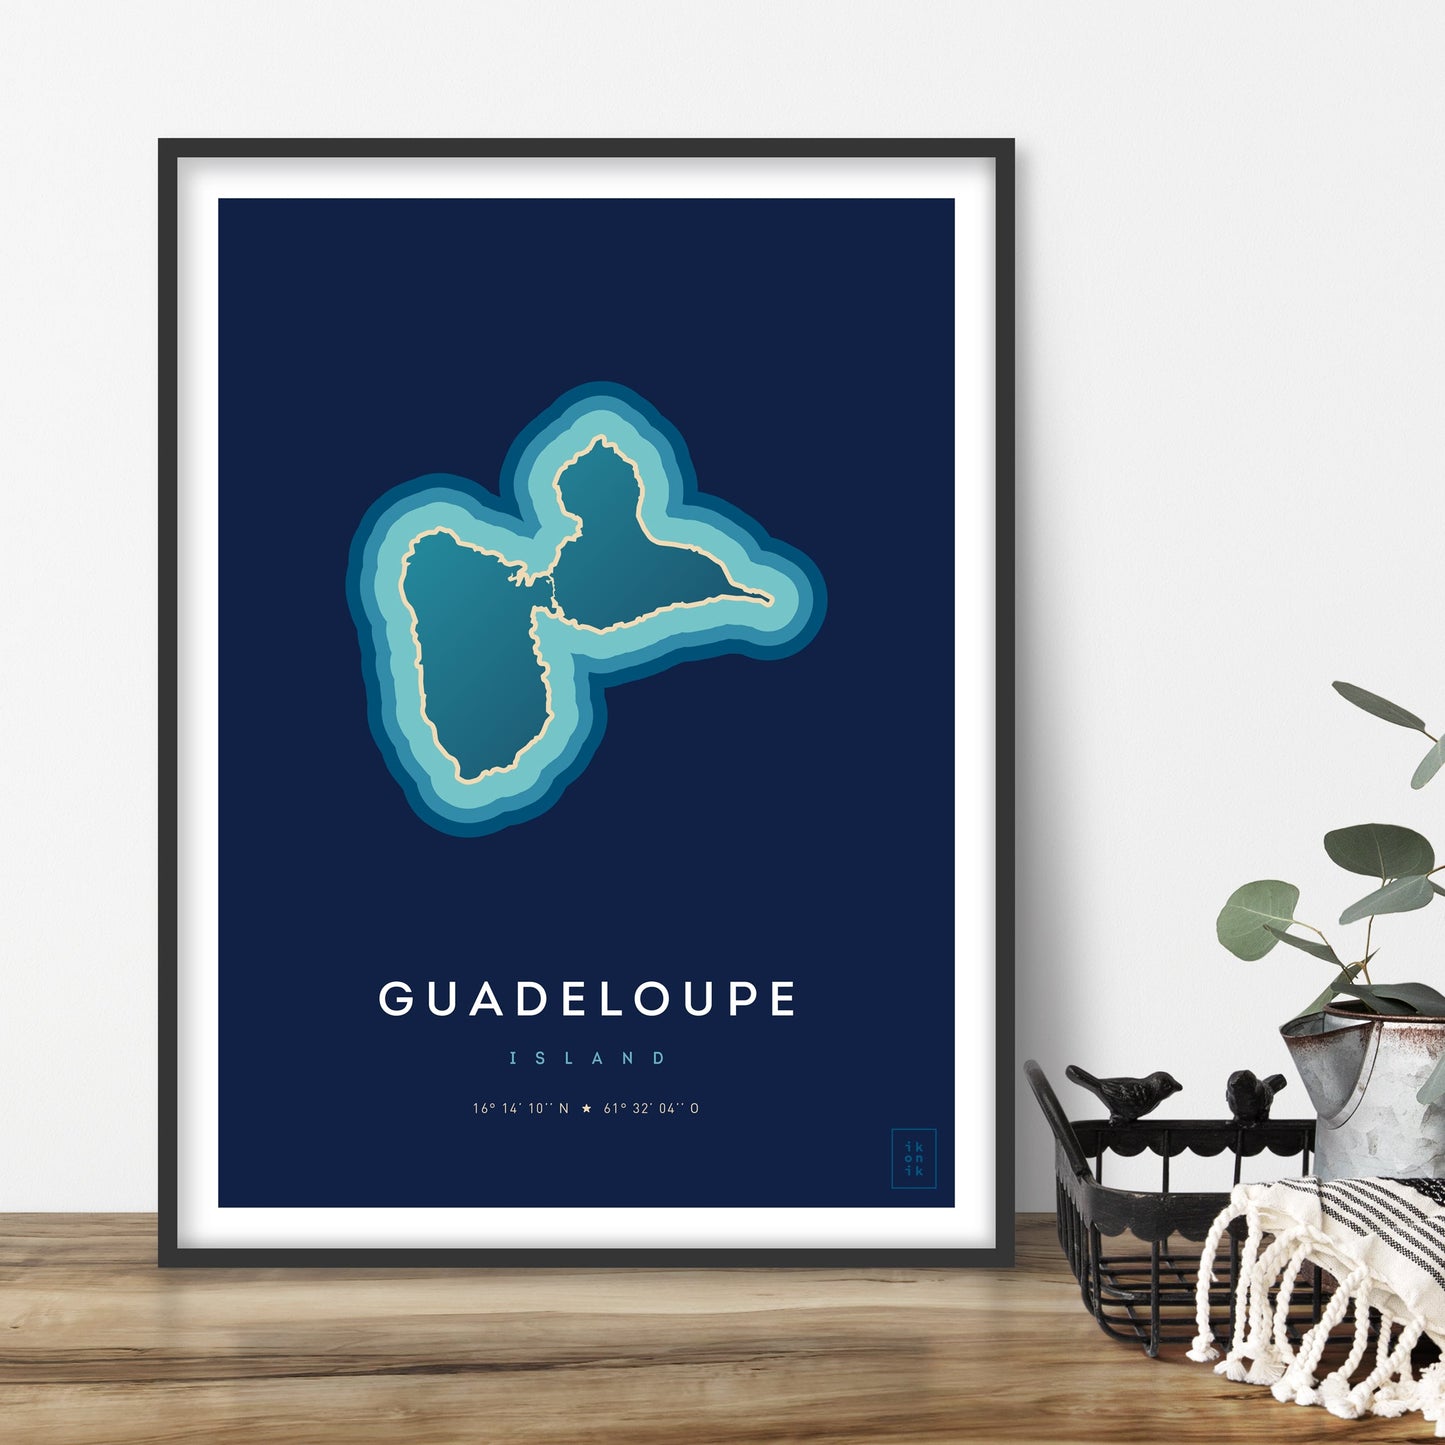 Guadeloupe island poster